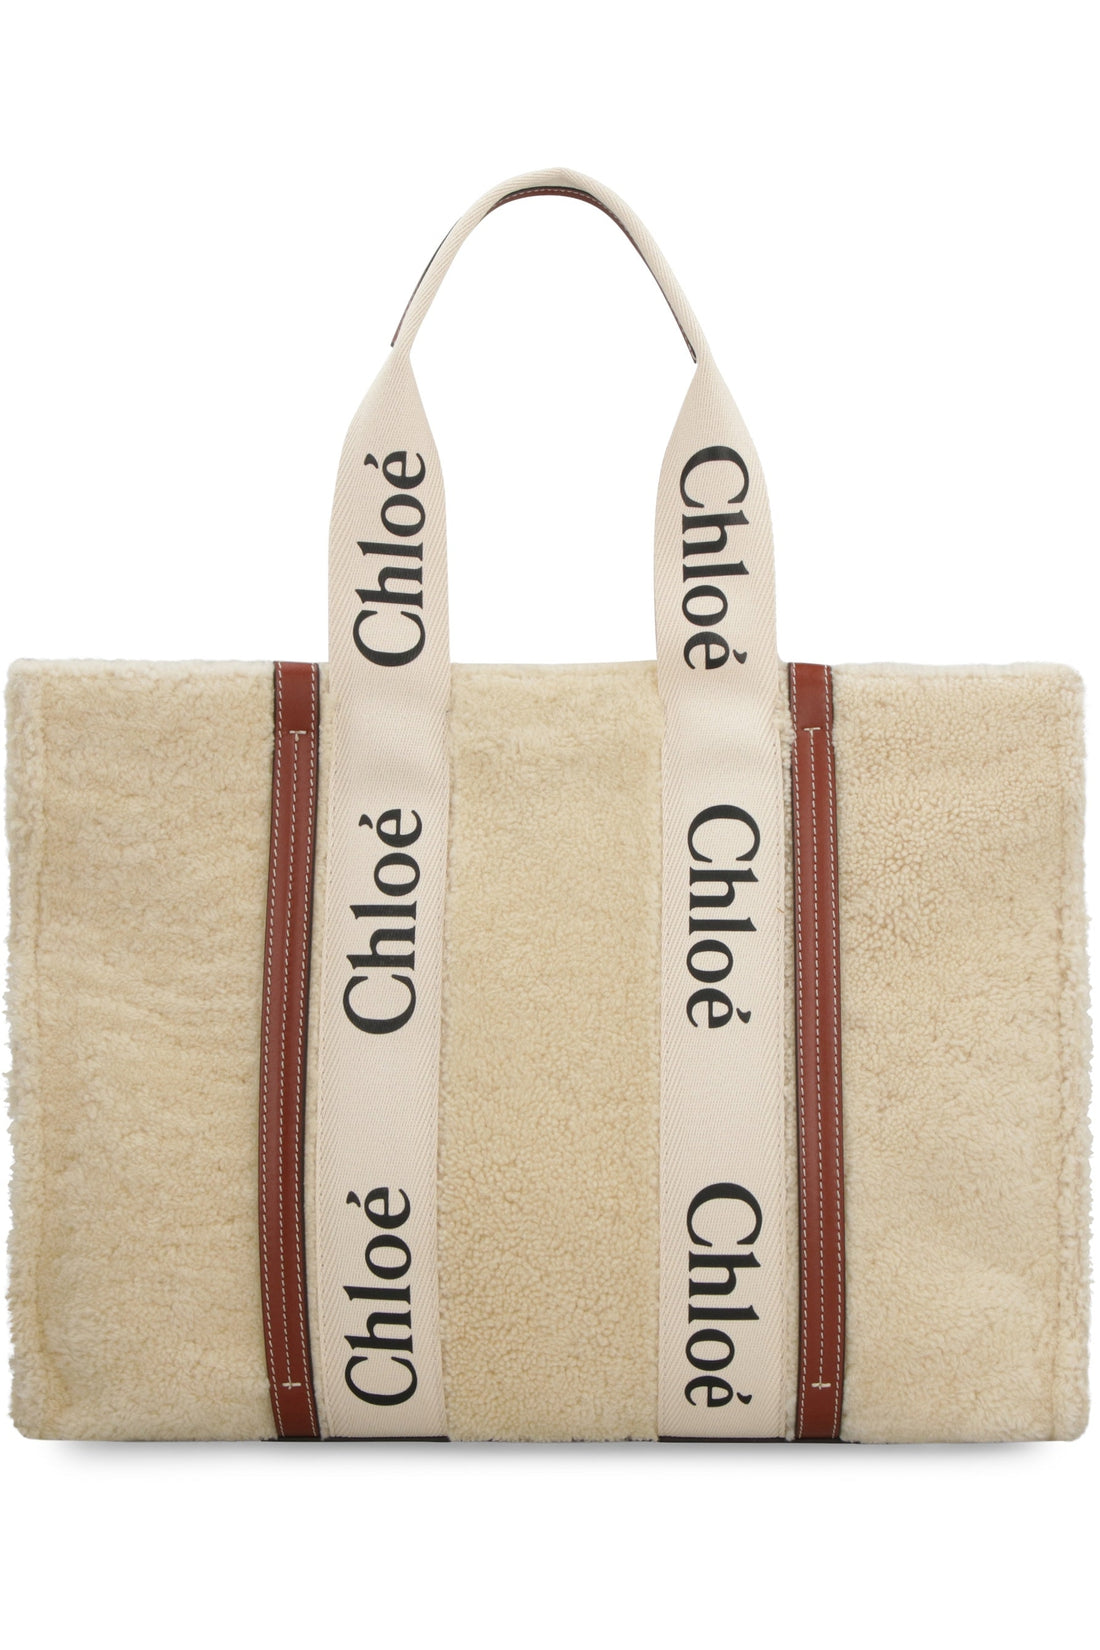 Chloé-OUTLET-SALE-Woody tote bag-ARCHIVIST